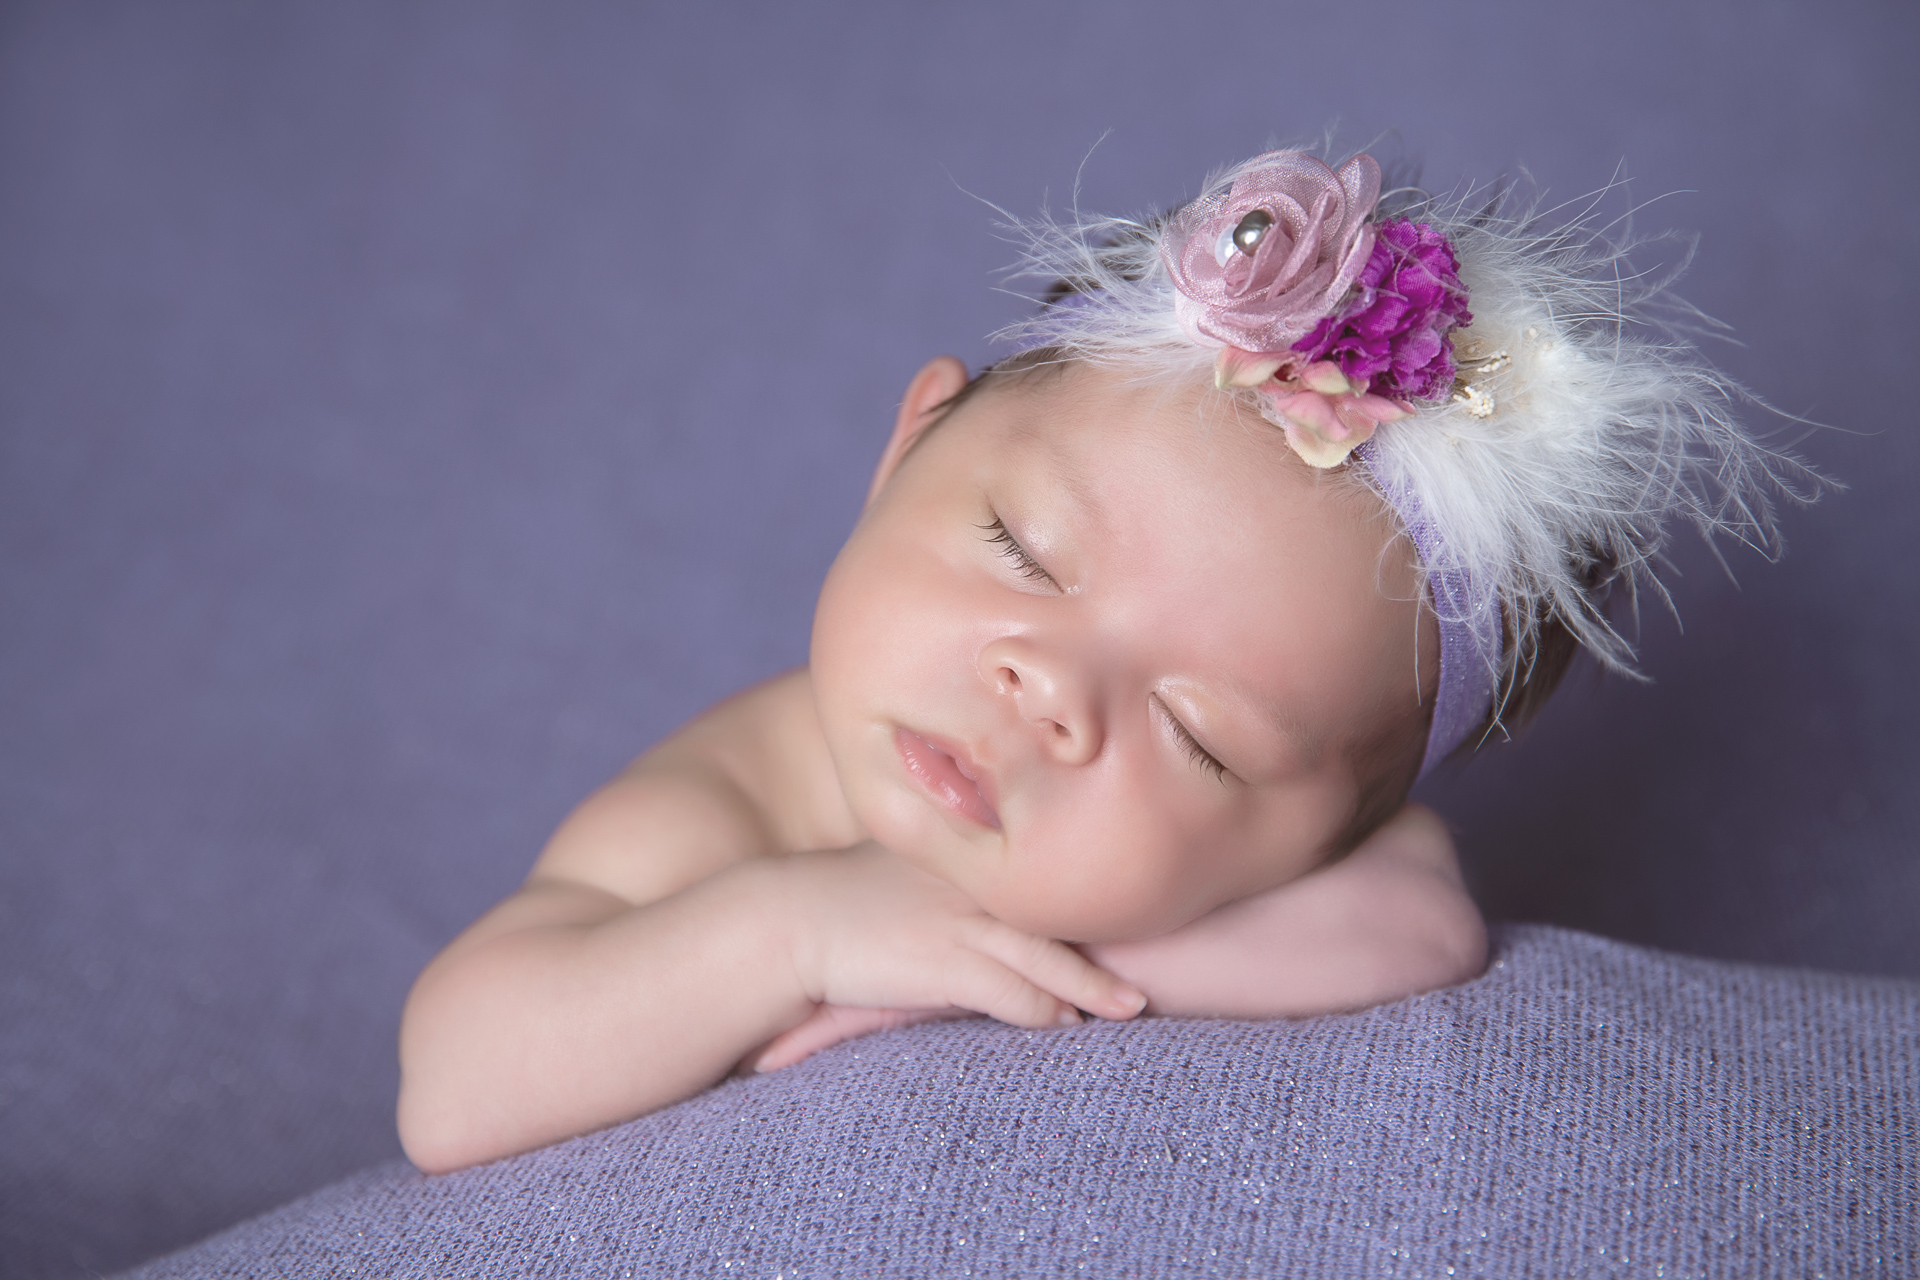 Newborn sleeps while wearing white and purple headband on purple backdrop.